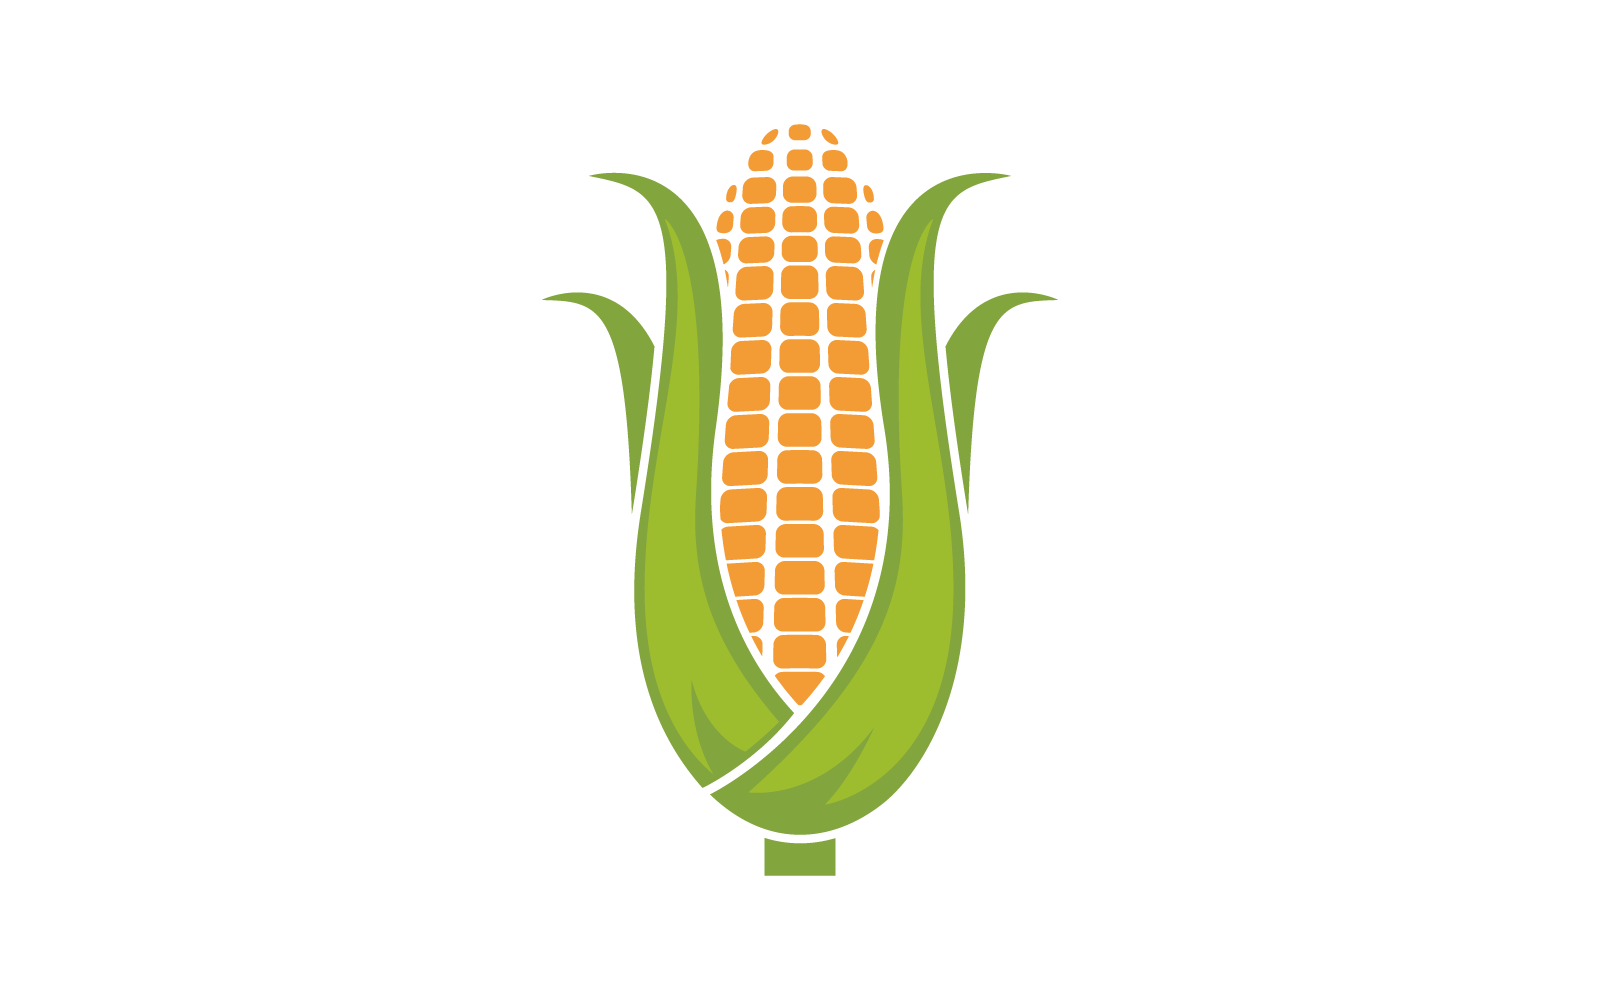 Corn logo illustration flat design template